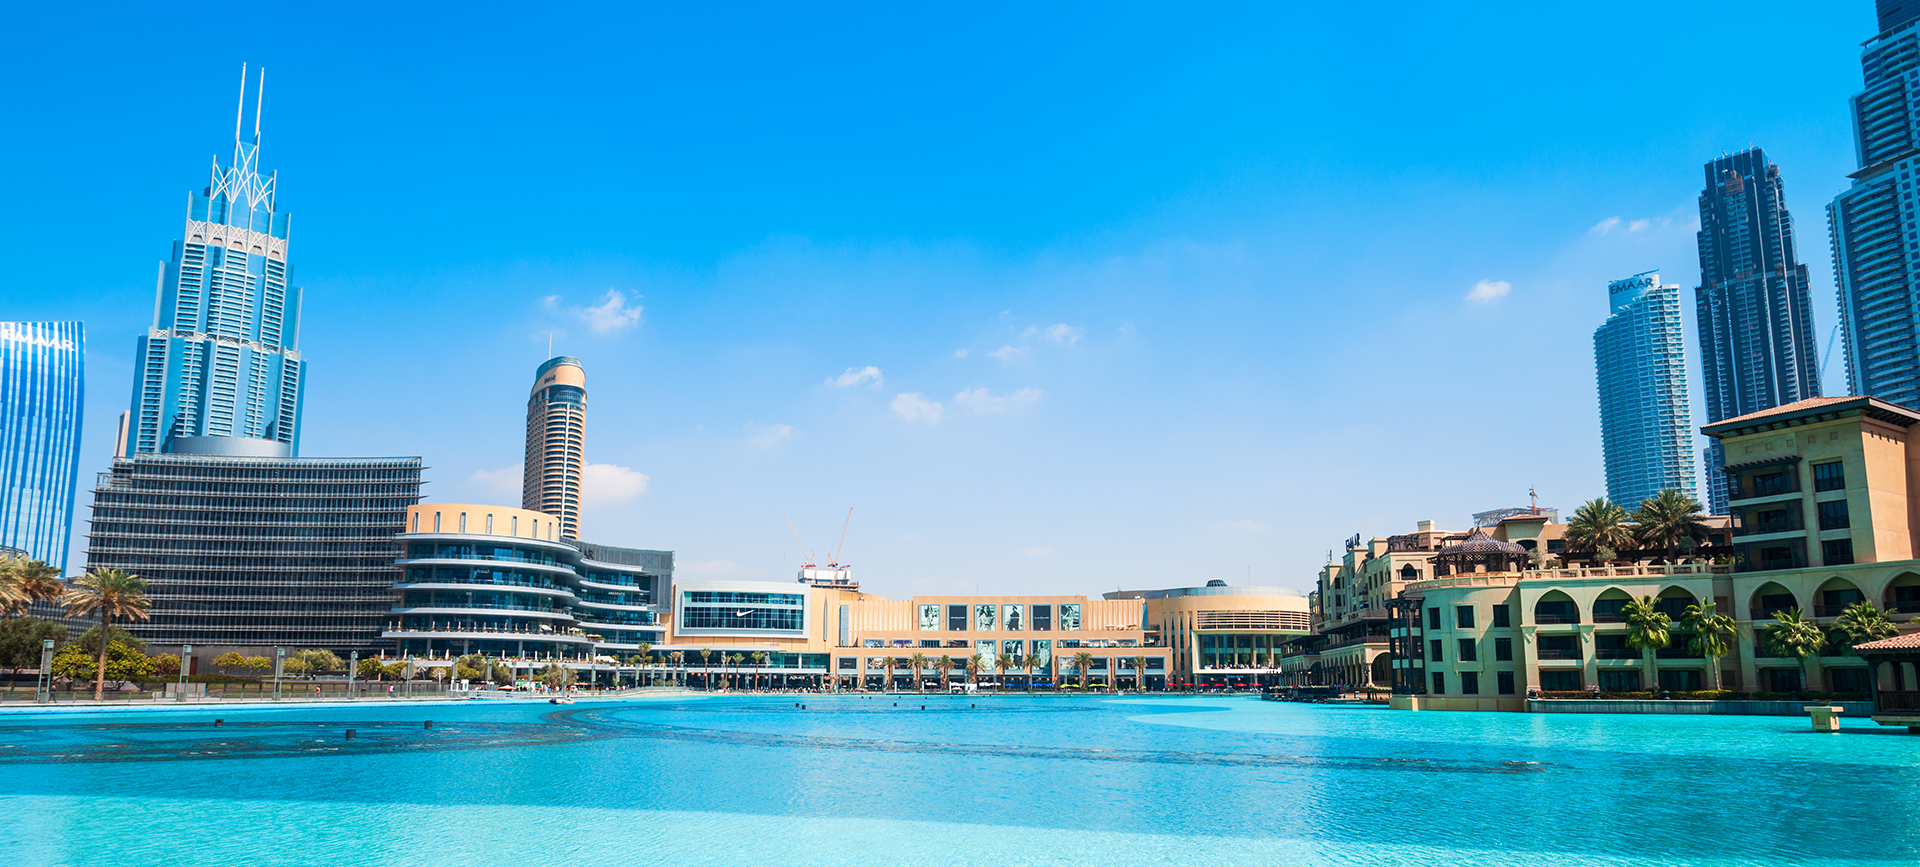 Swimming pool renovation in Dubai